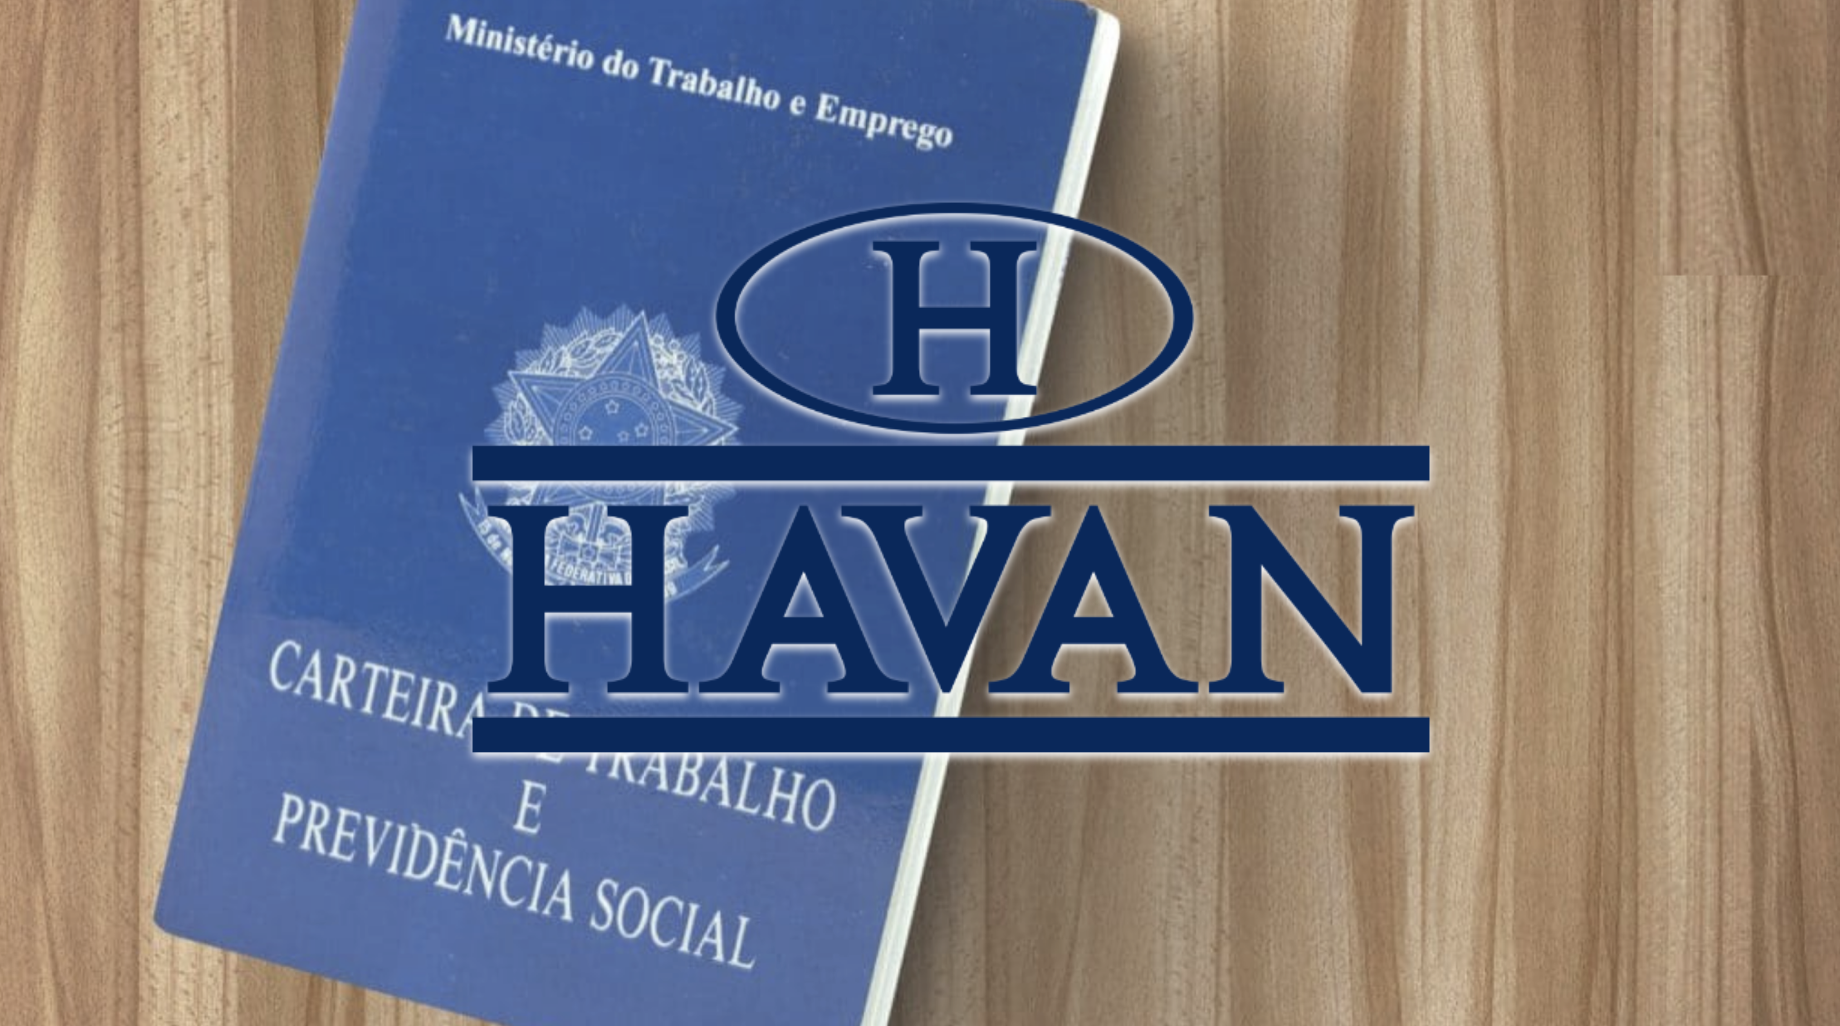 Envie o seu currículo e faça parte do time Havan! Oportunidade para o Brasil todo